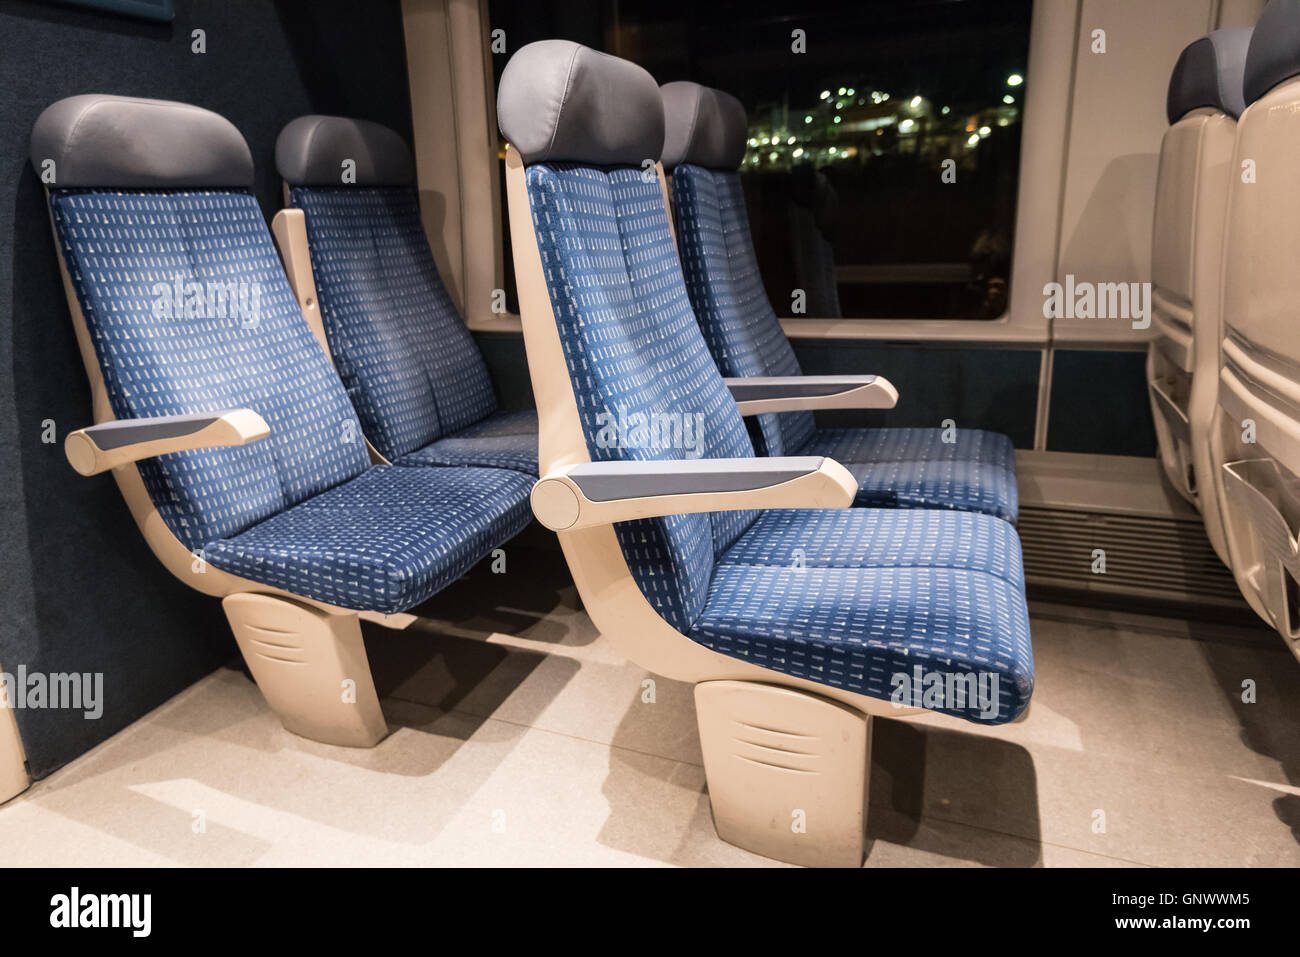 Seis asientos de blue train un tren francés en la noche Foto de stock